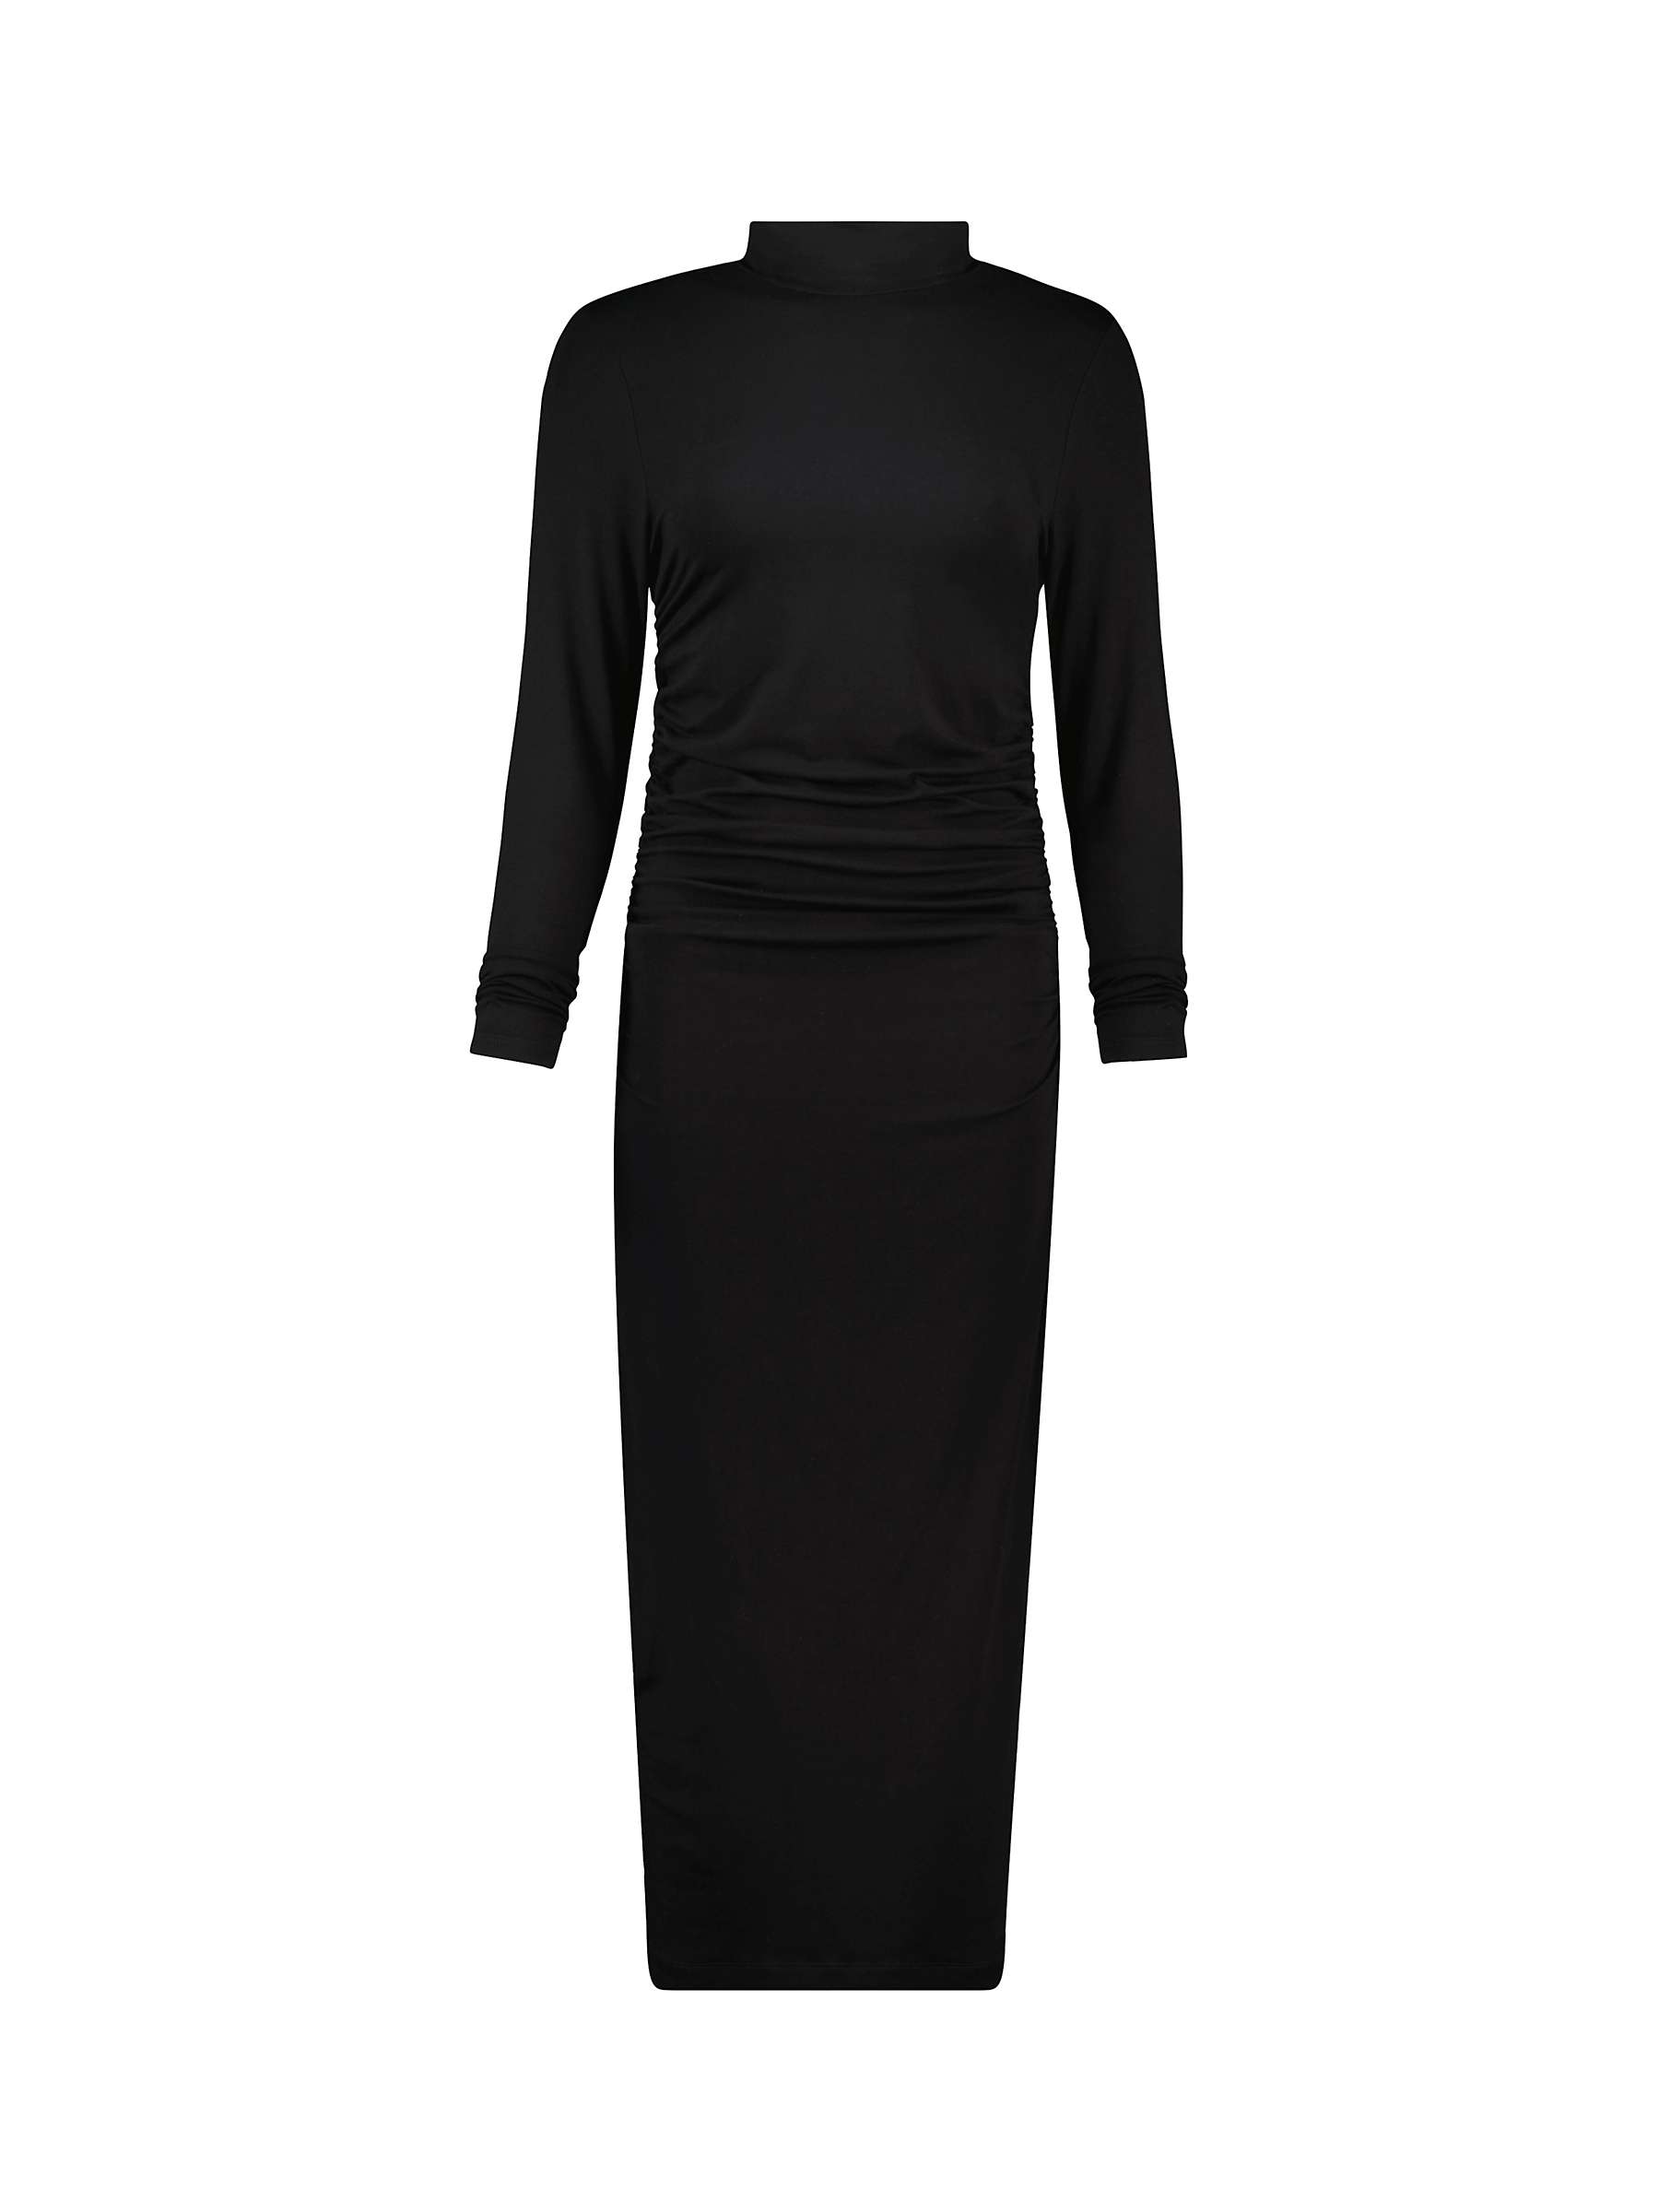 Buy Baukjen Noelle Jersey Bodycon Dress, Caviar Black Online at johnlewis.com